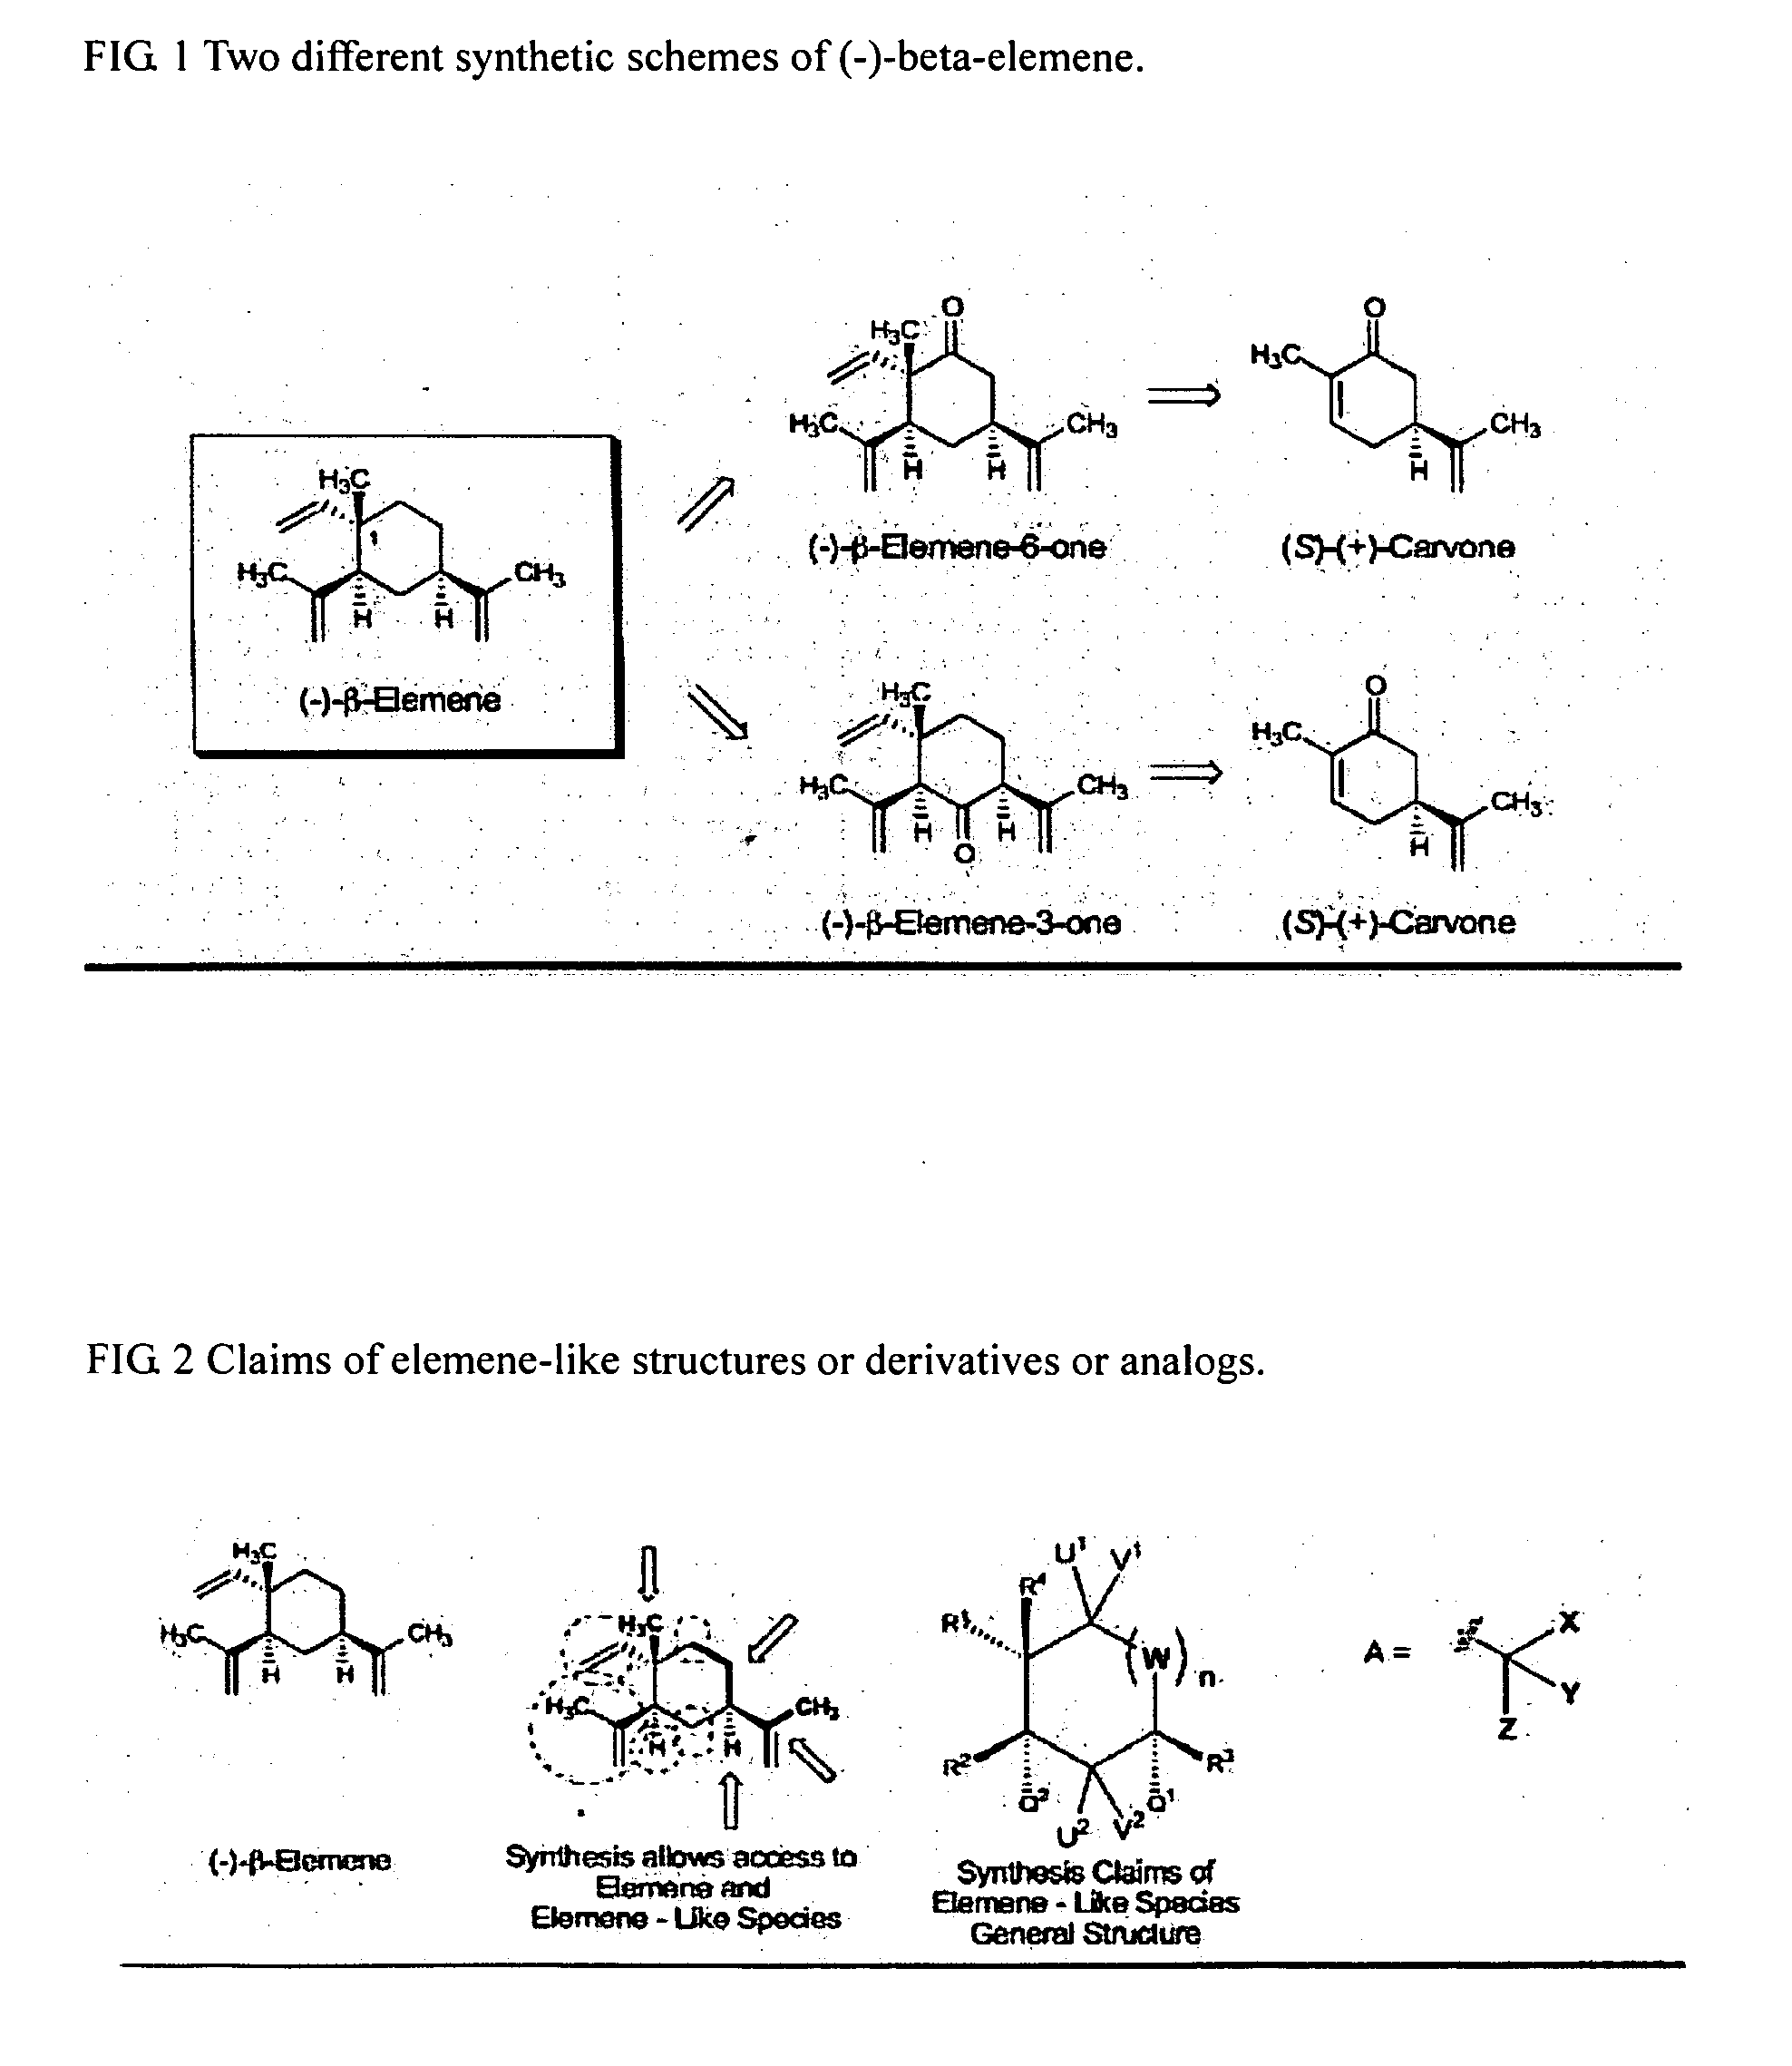 Synthesis of (1)-beta-elemene, (-)-beta-elemenal, (-)-beta-elemenol, (-)-beta-elemene fluoride and their analogues, intermediates, and composition and uses thereof